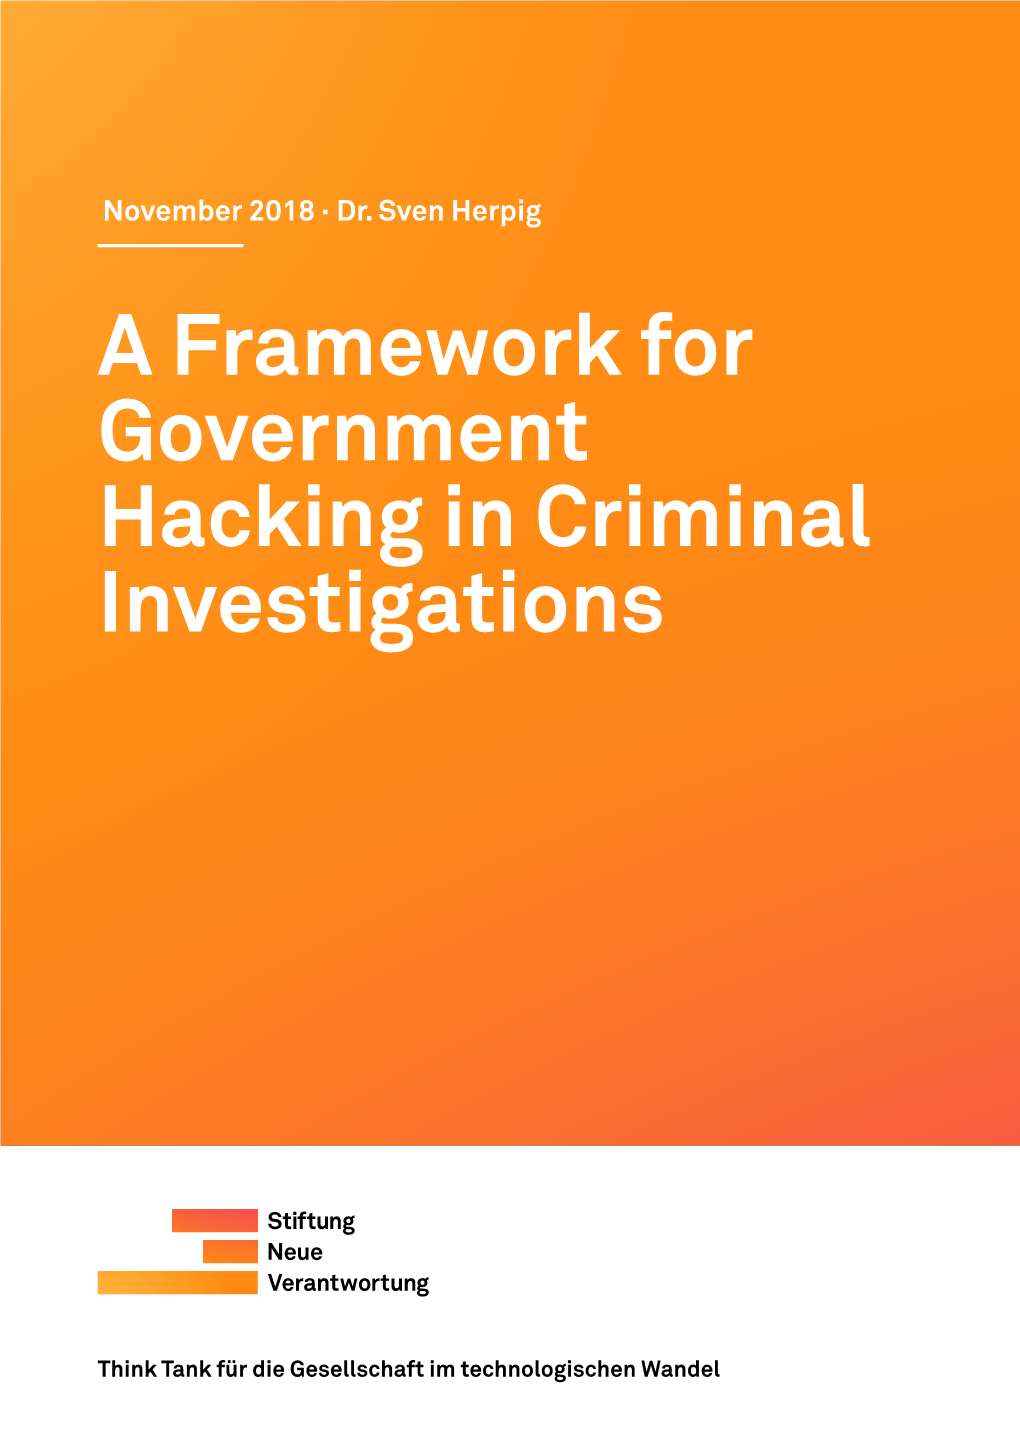 A Framework for Government Hacking in Criminal Investigations